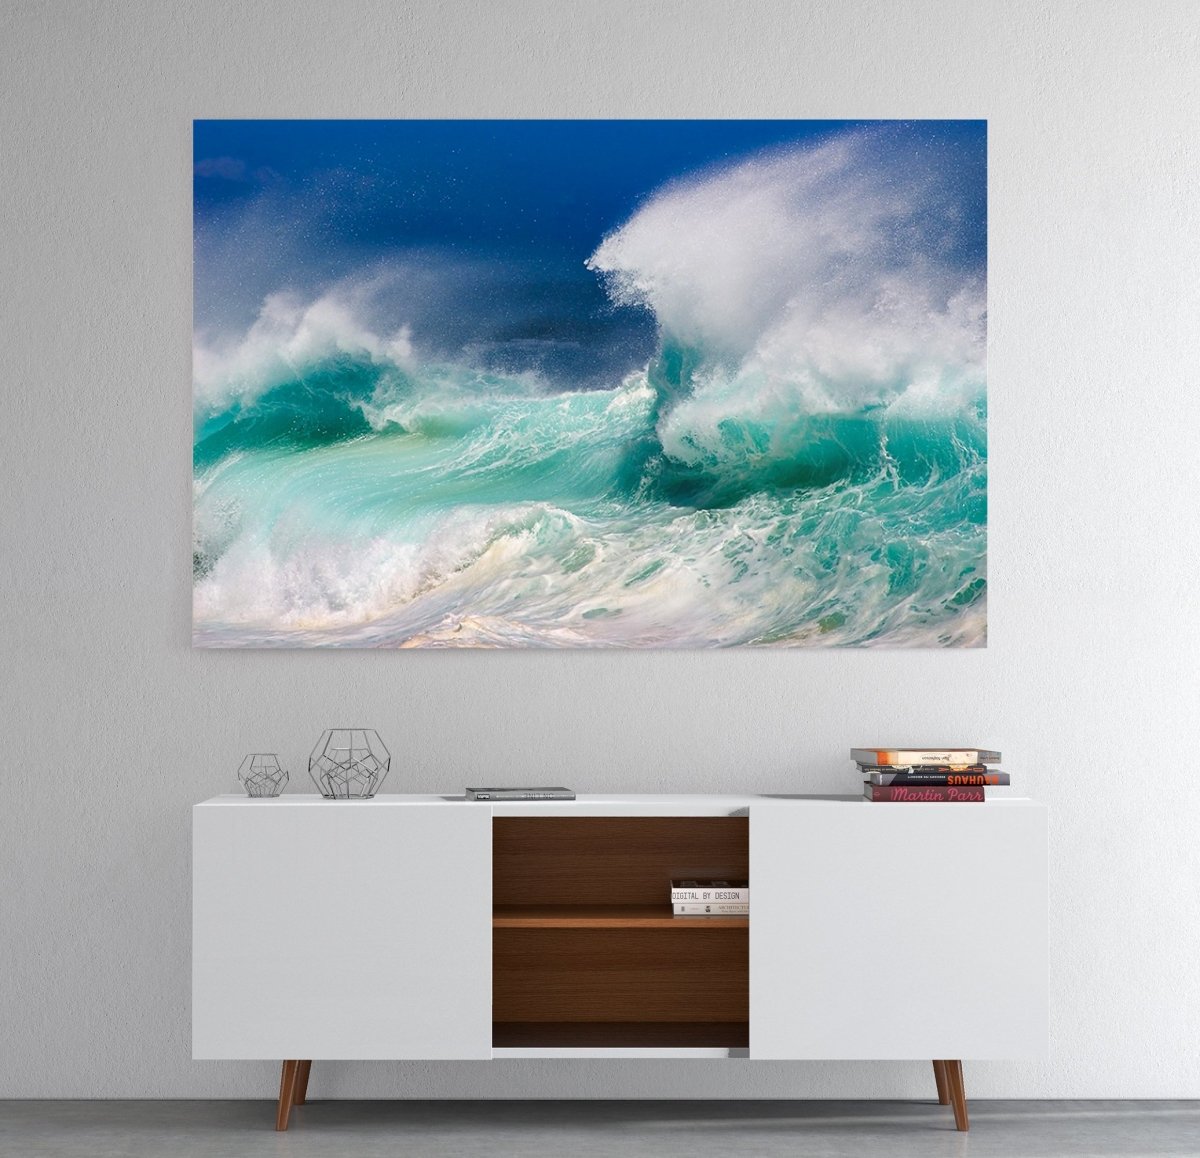 Shipwreck in the Ocean Canvas Print Wall Art - 1X32896 - Art Fever - Art Fever